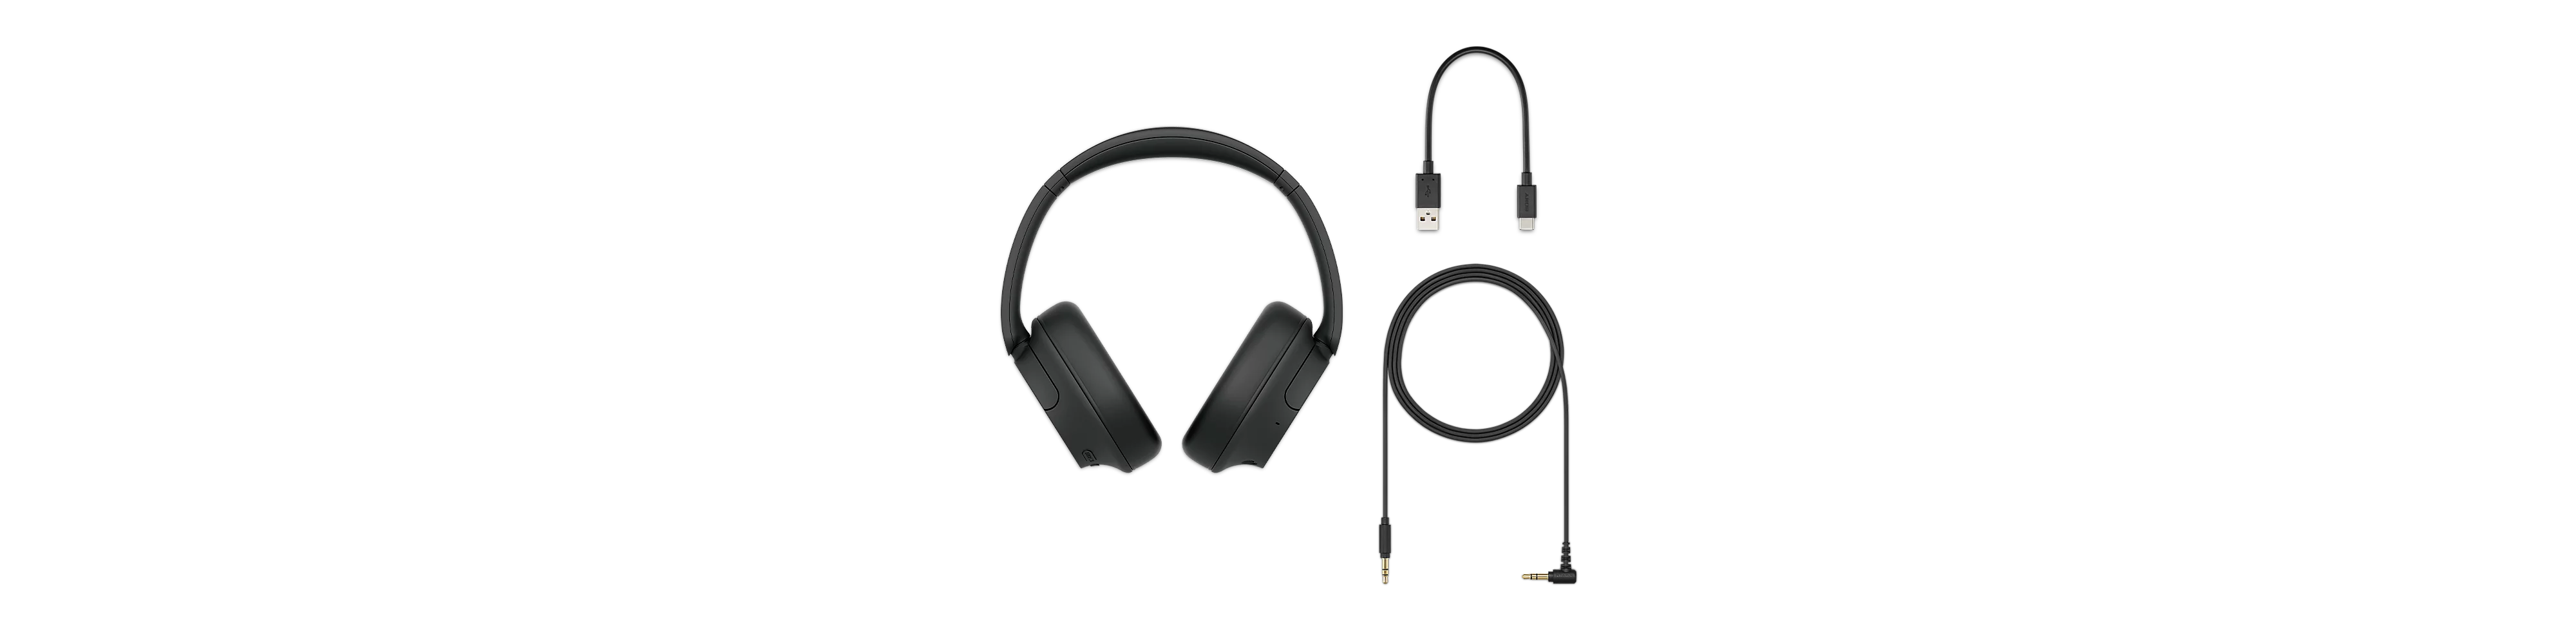 Sony WH-CH720N Noise Canceling Wireless Over Ear Headphones